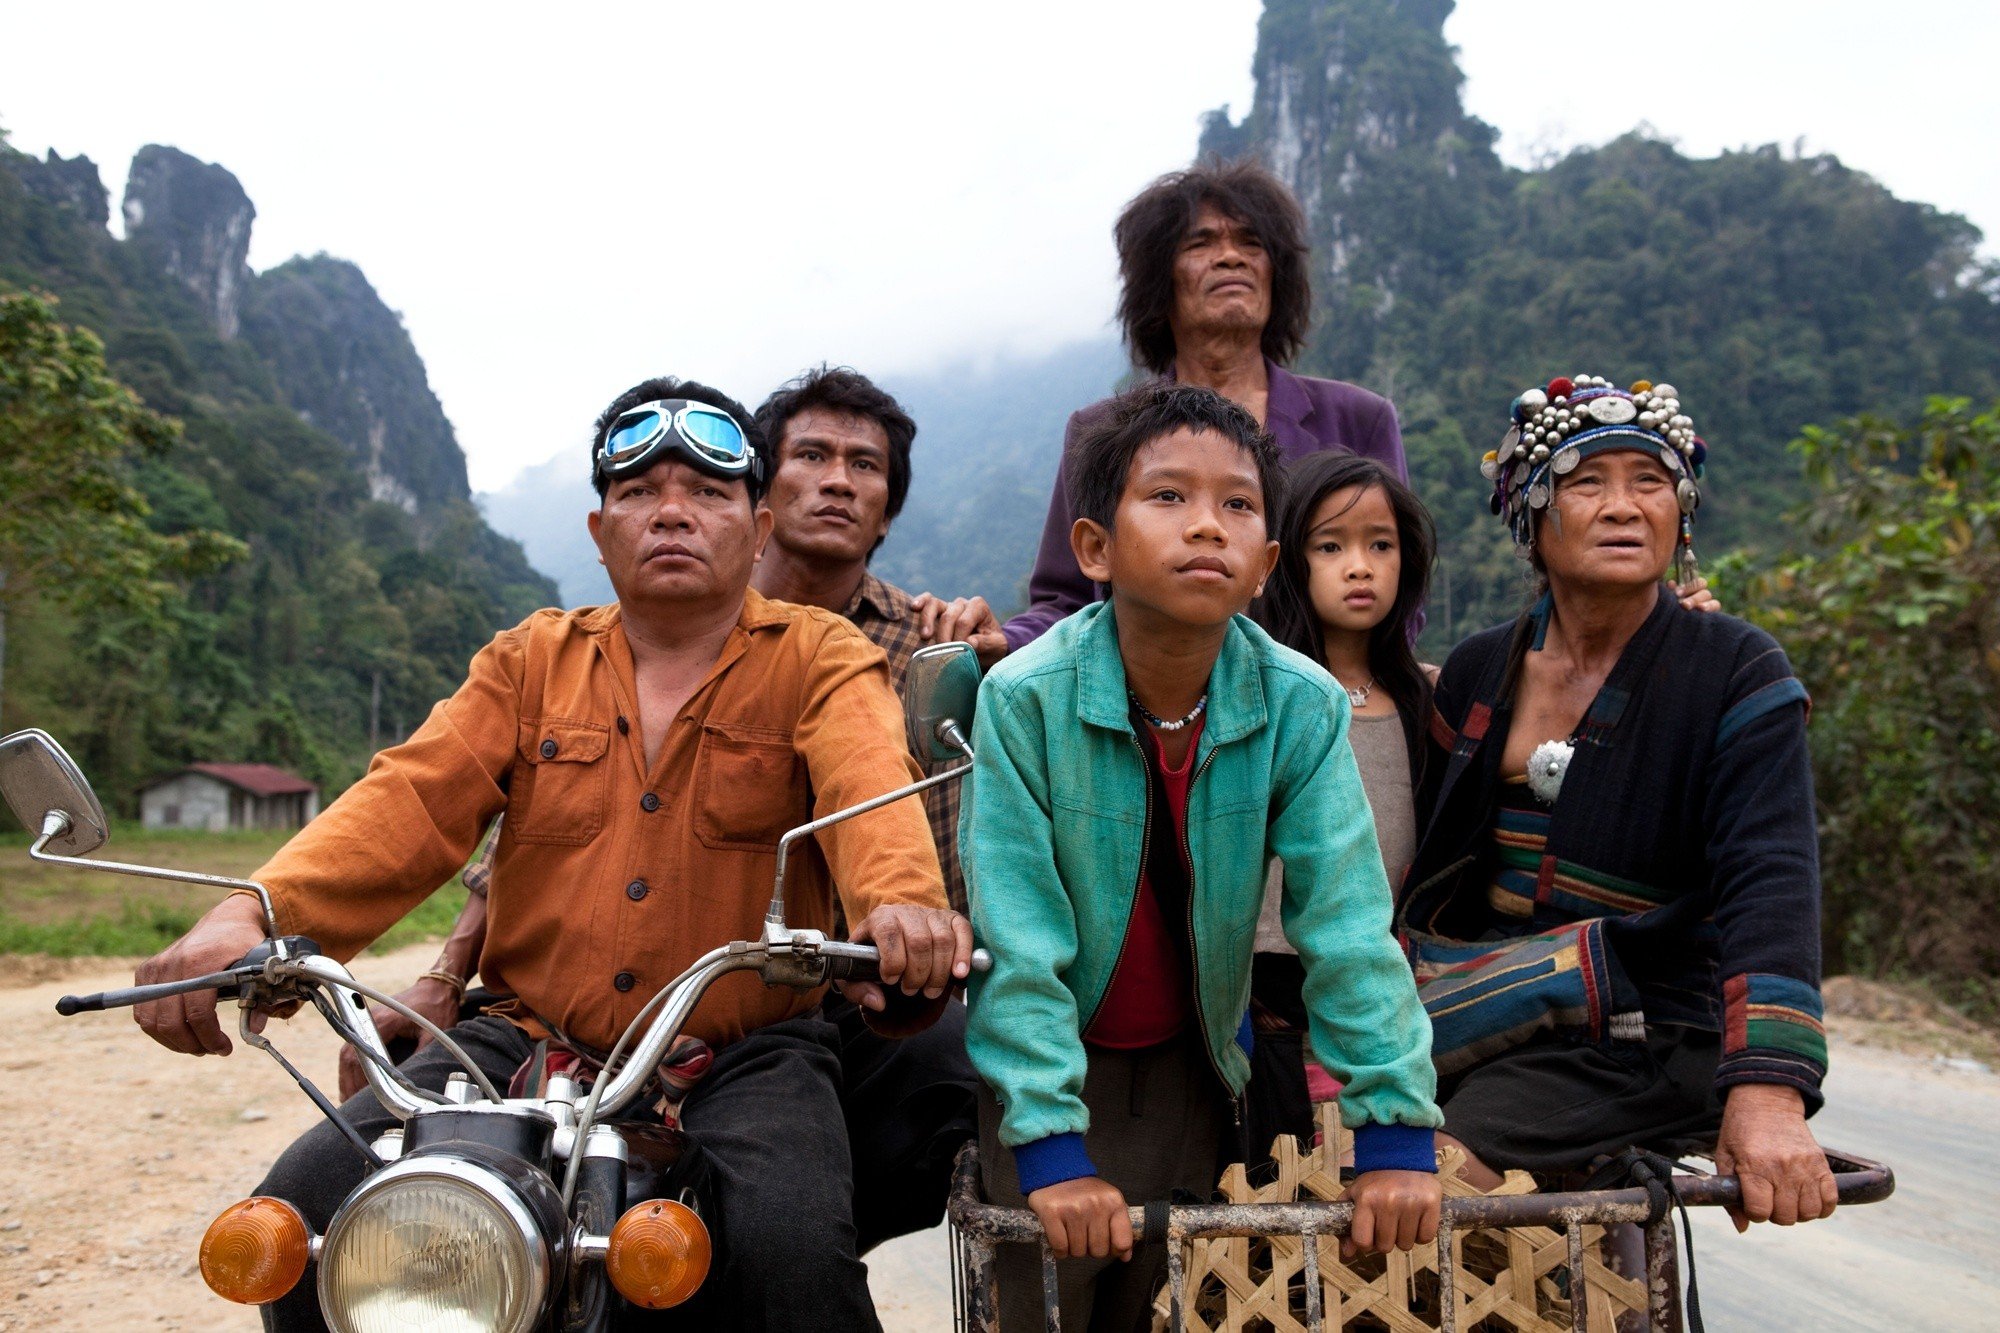 Sumrit Warin, Thep Phongam, Sitthiphon Disamoe, Loungnam Kaosainam and Bunsri Yindi in Kino Lorber's The Rocket (2014). Photo credit by Tom Greenwood.